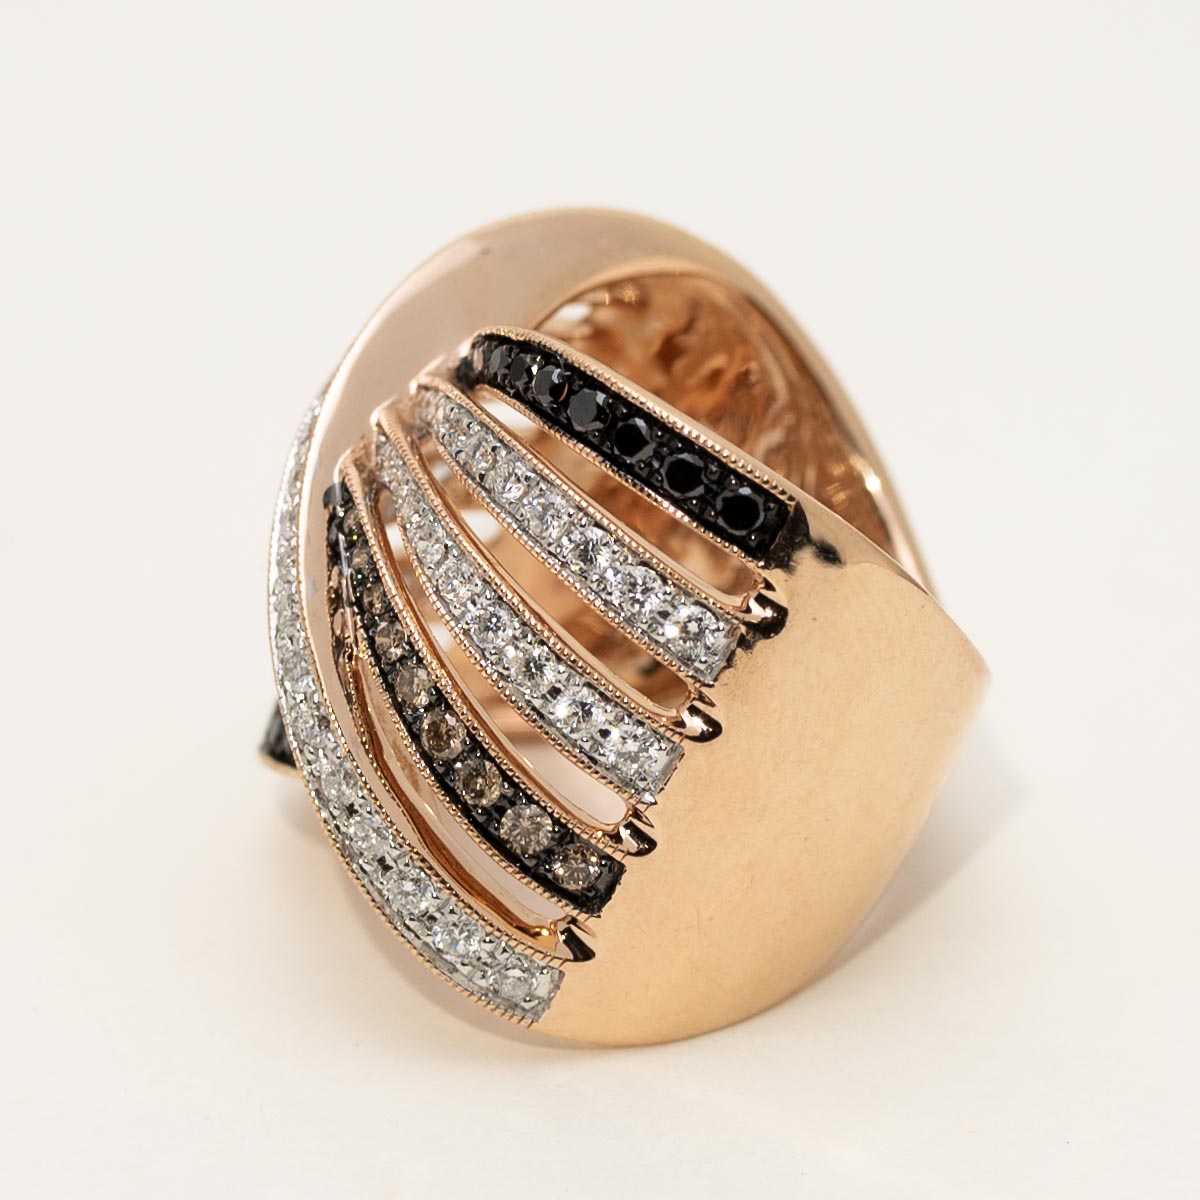 Dabakarov Champagne Black and White Diamond Fashion Ring in 14kt Rose Gold (1 1/4ct tw)